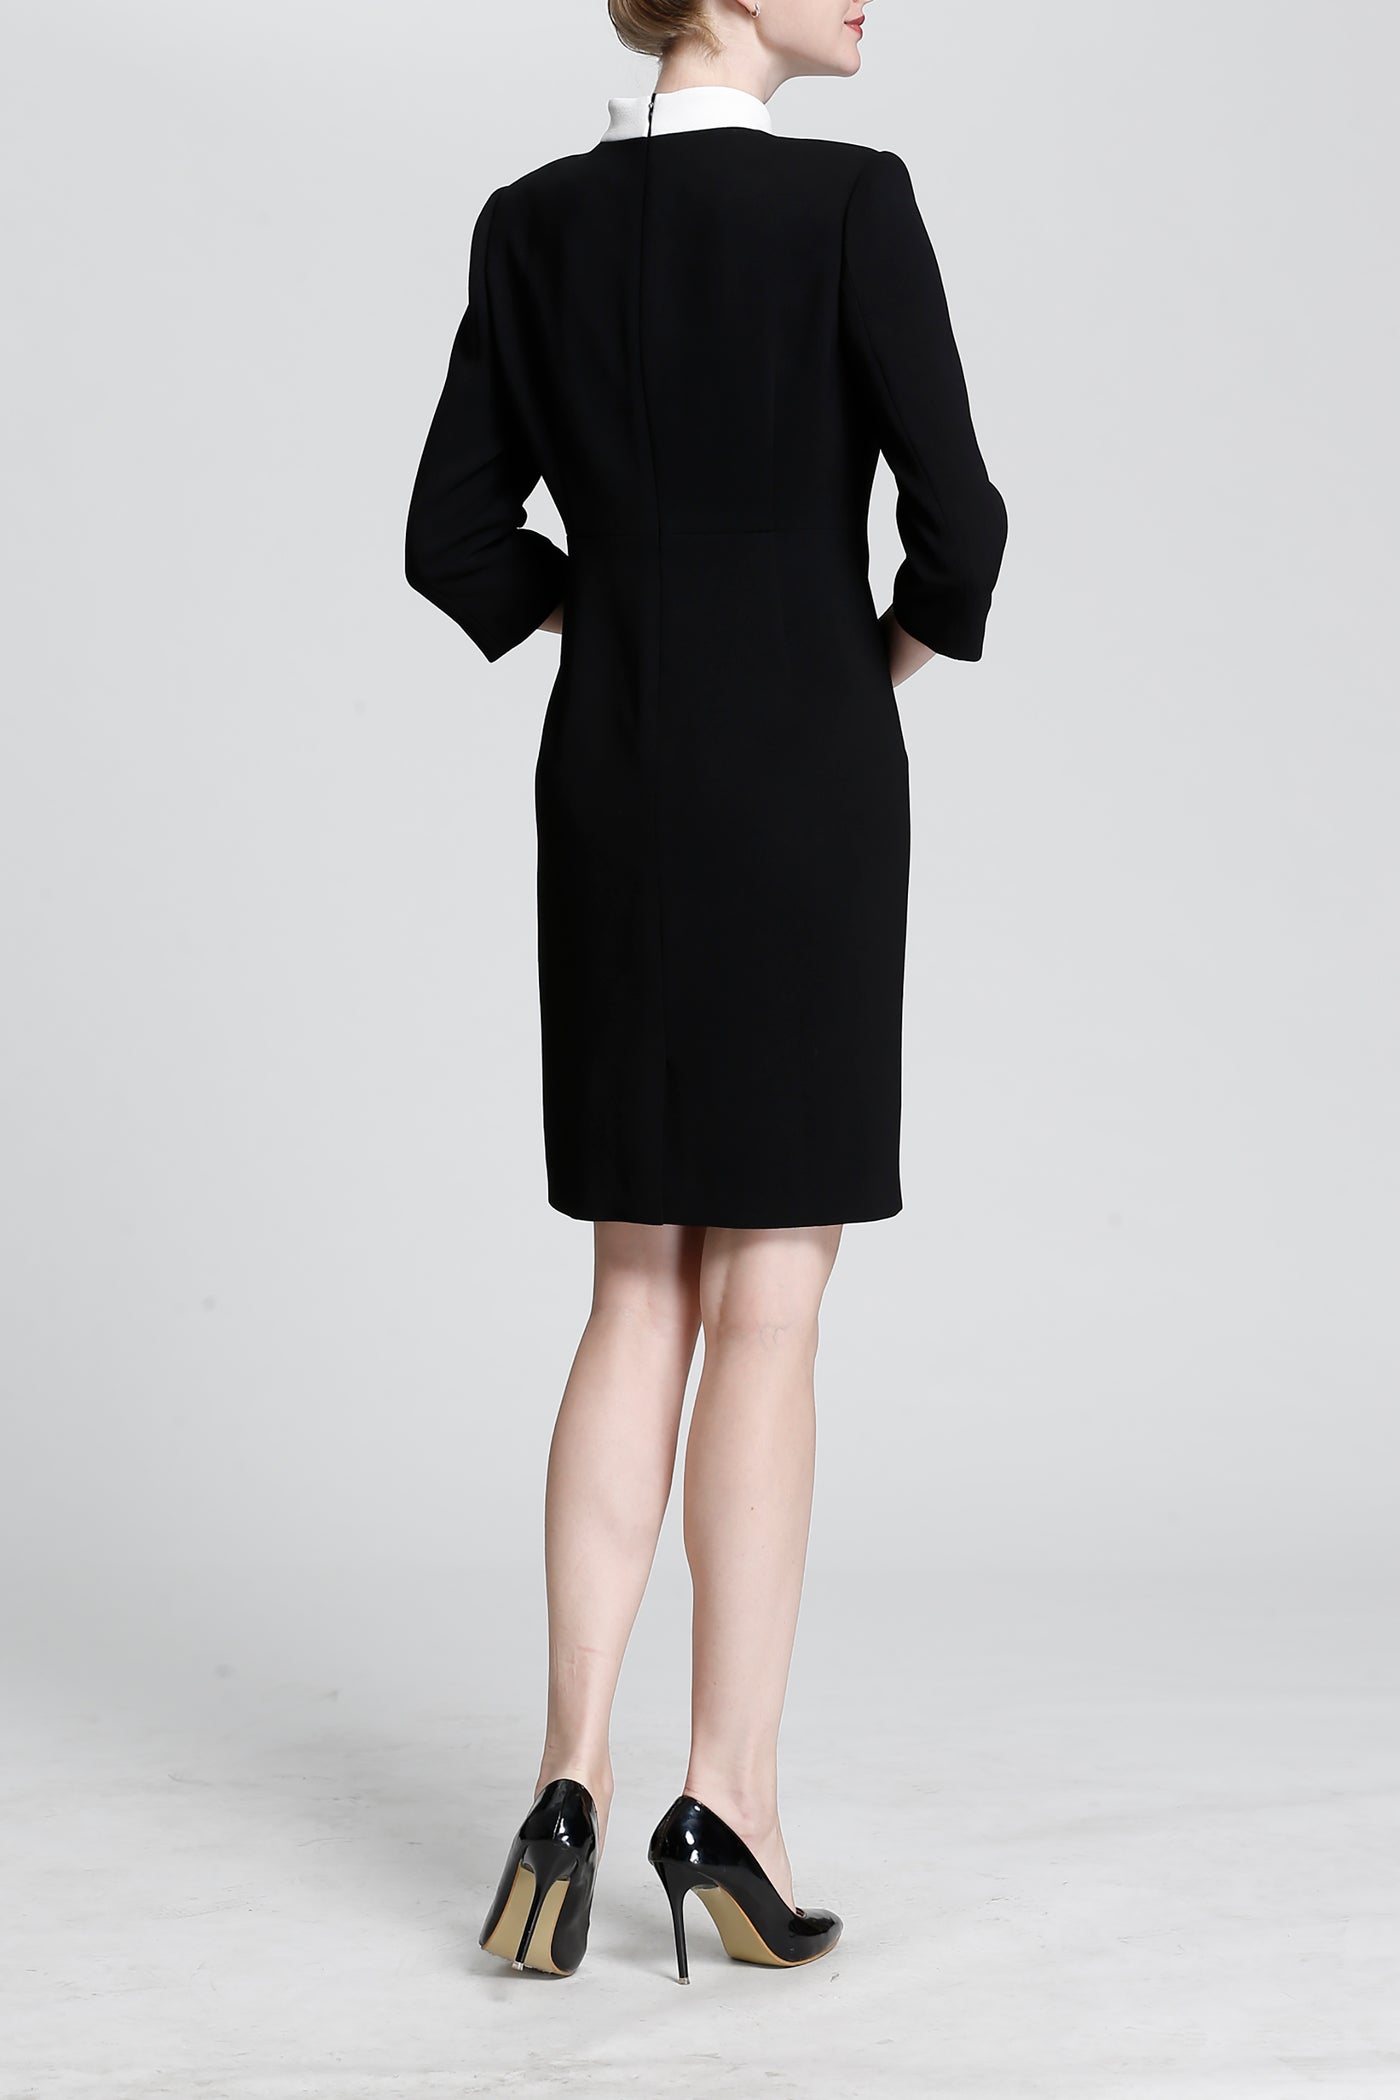 DL Black & White Stand-Up Collar Dress